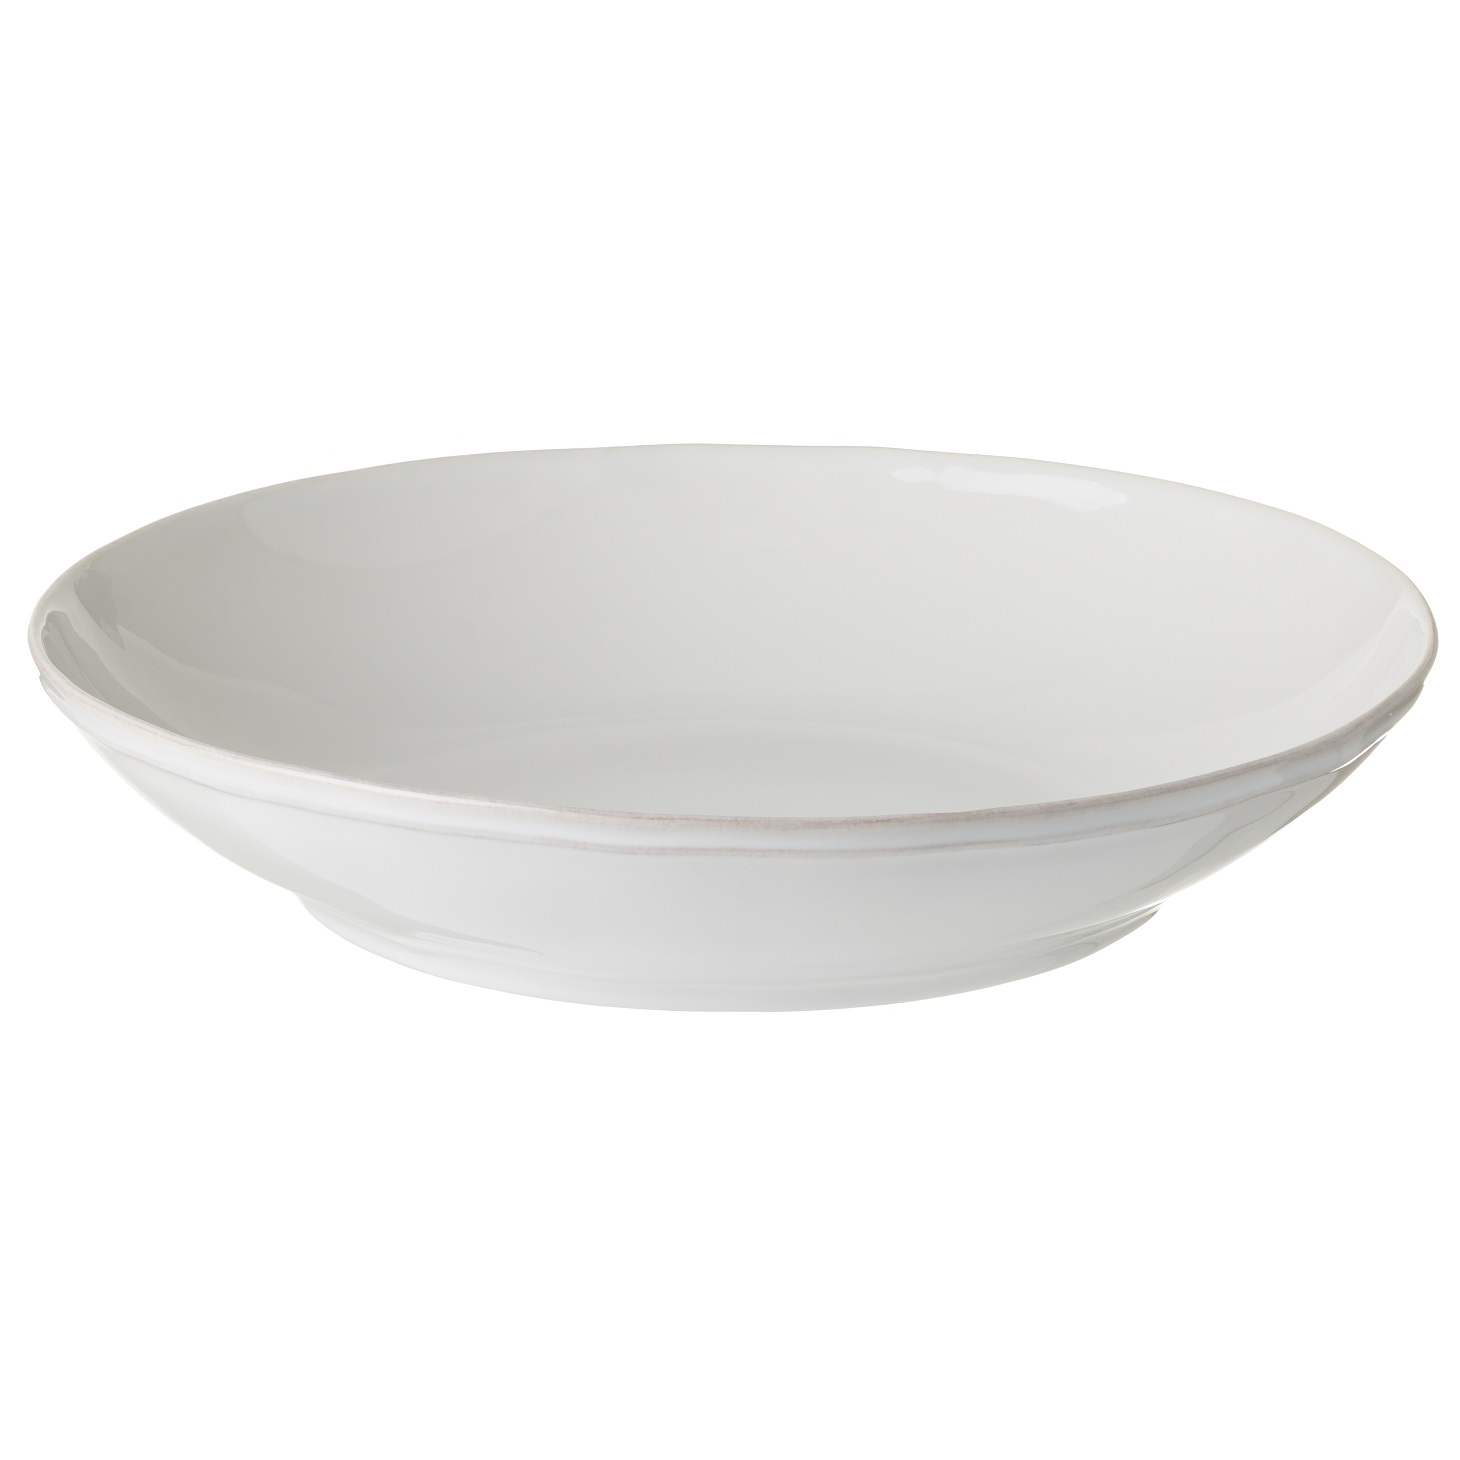 Fontana White Pasta/serving Bowl 34cm Gift